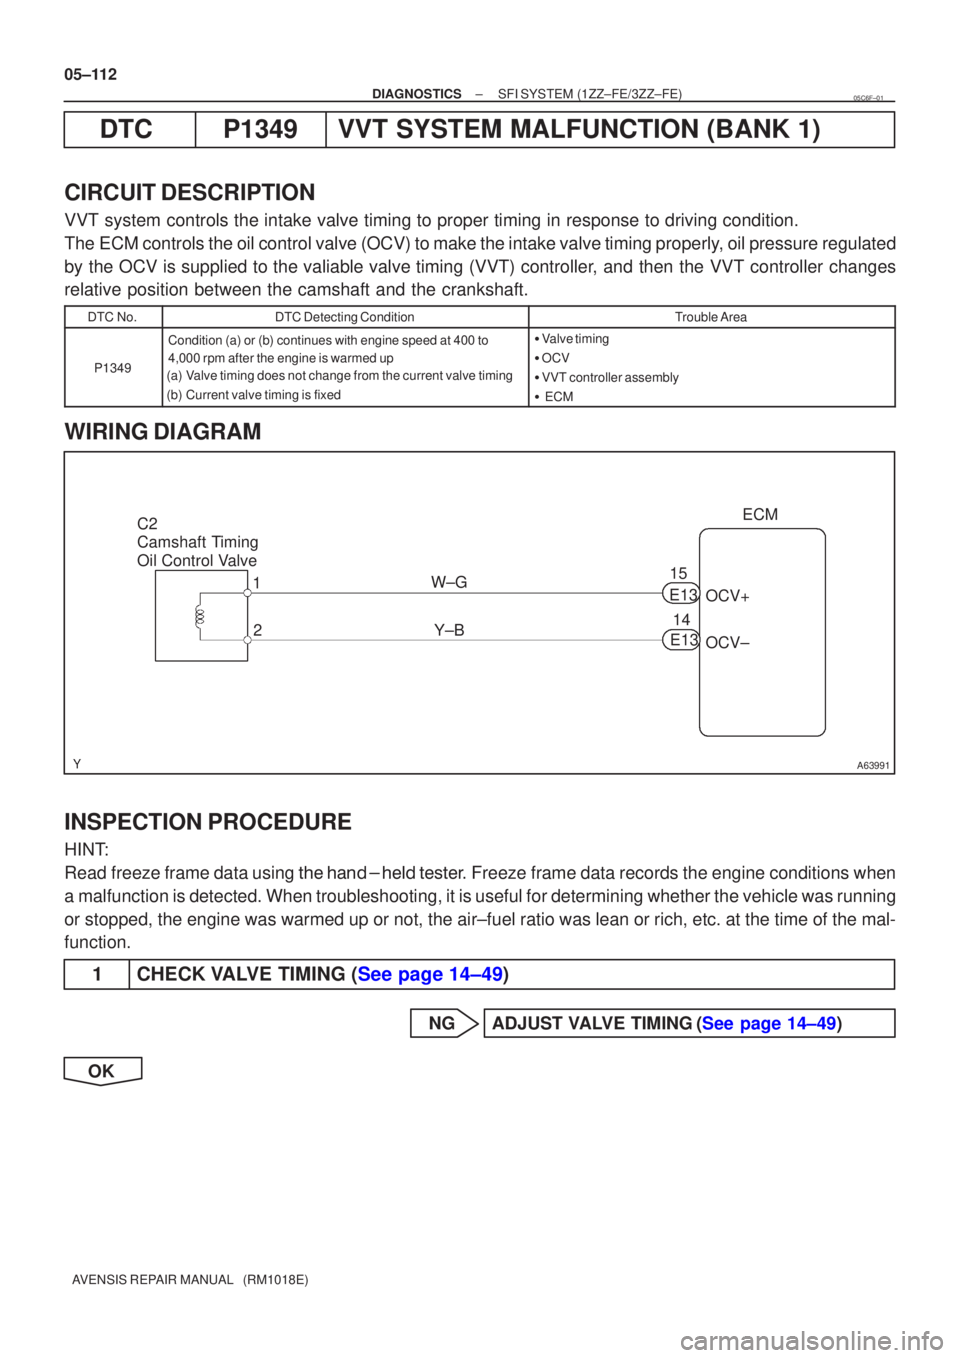 TOYOTA AVENSIS 2005  Service Repair Manual A63991
ECM
C2
Camshaft Timing 
Oil Control Valve
2
1
Y±B
W±G
OCV+
OCV±
15
14
E13
E13
05±112
±
DIAGNOSTICS SFI SYSTEM(1ZZ±FE/3ZZ±FE)
AVENSIS REPAIR MANUAL   (RM1018E)
DTCP1349VVT SYSTEM MALFUNCT